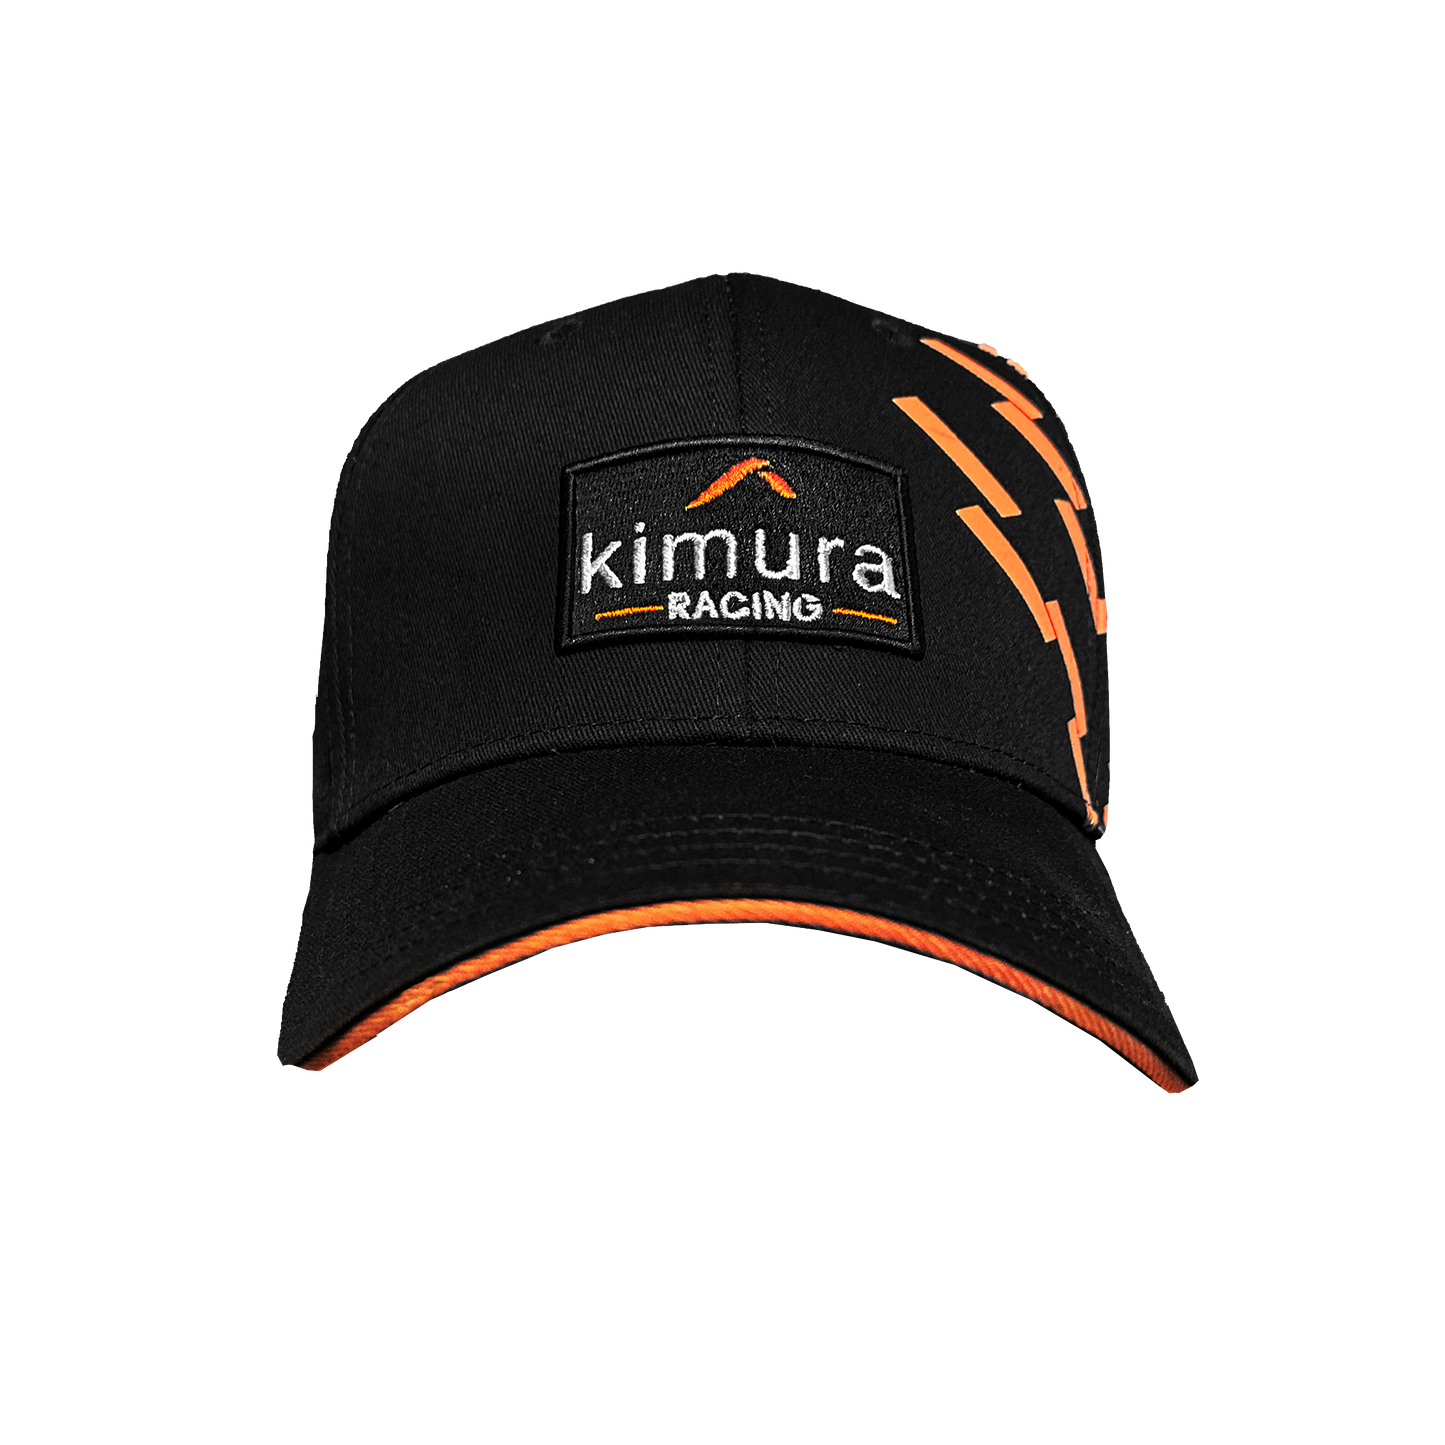 Kimura E-sports Race Team Caps